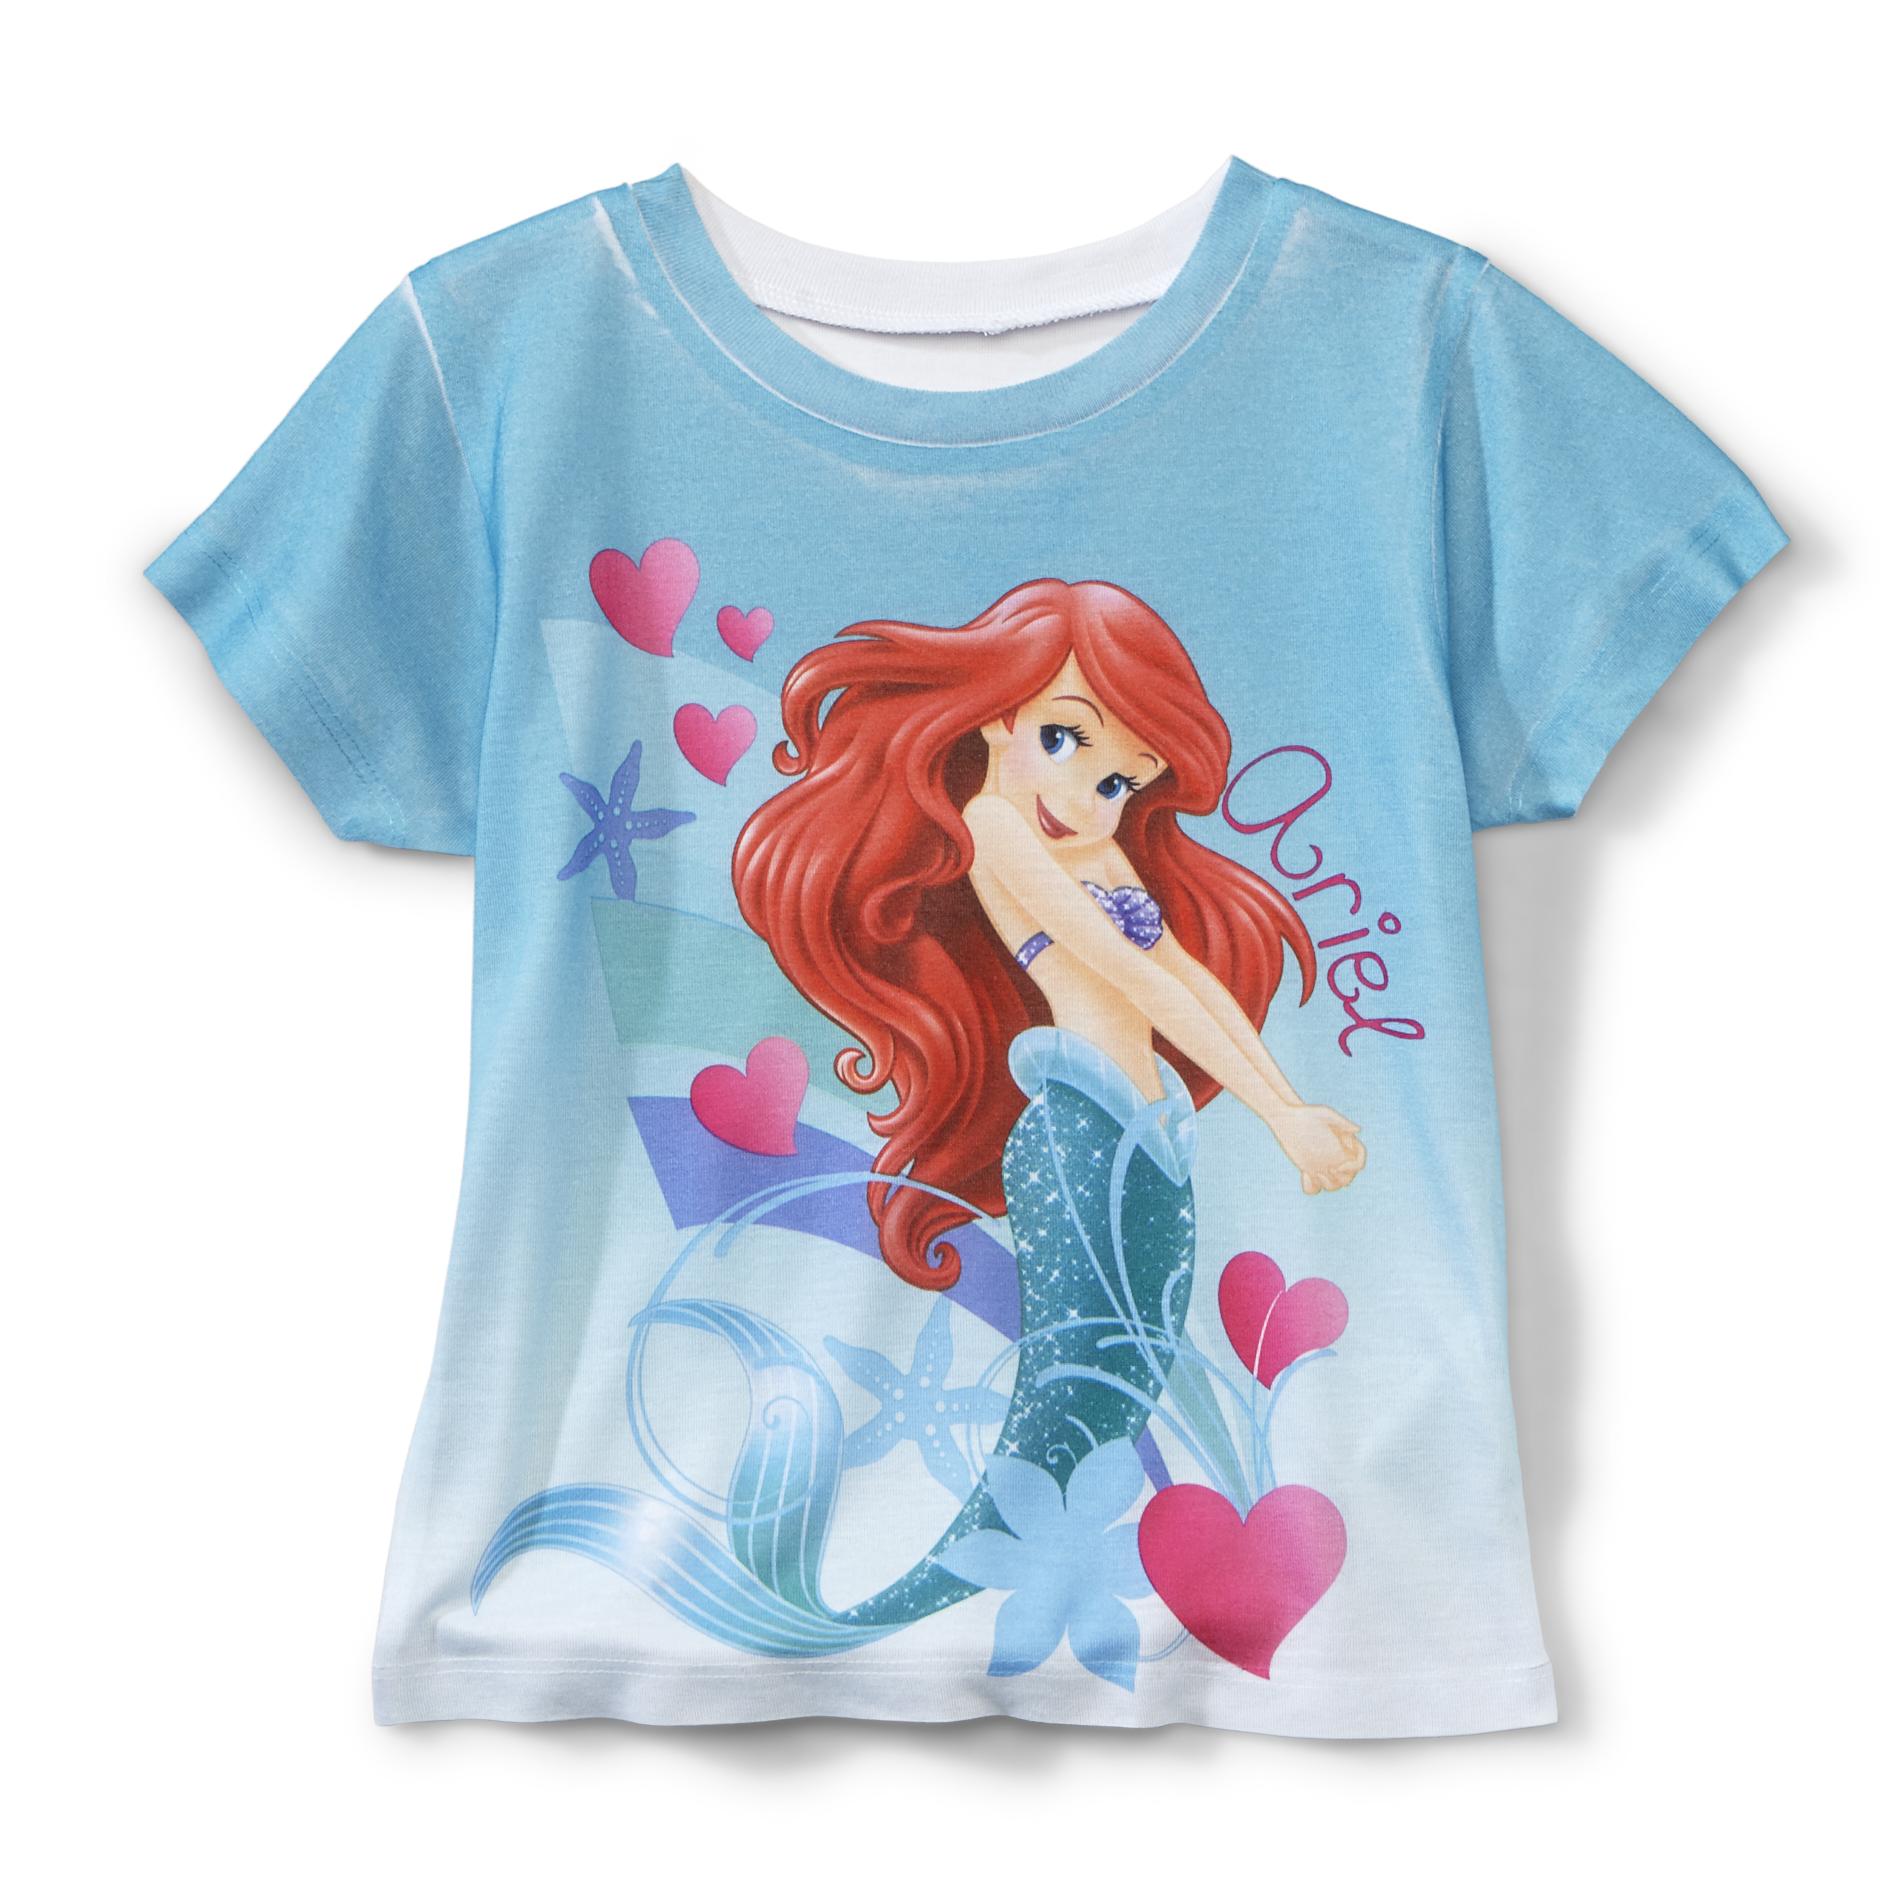 Disney Princess Toddler Girl's Sublimation T-Shirt - Ariel